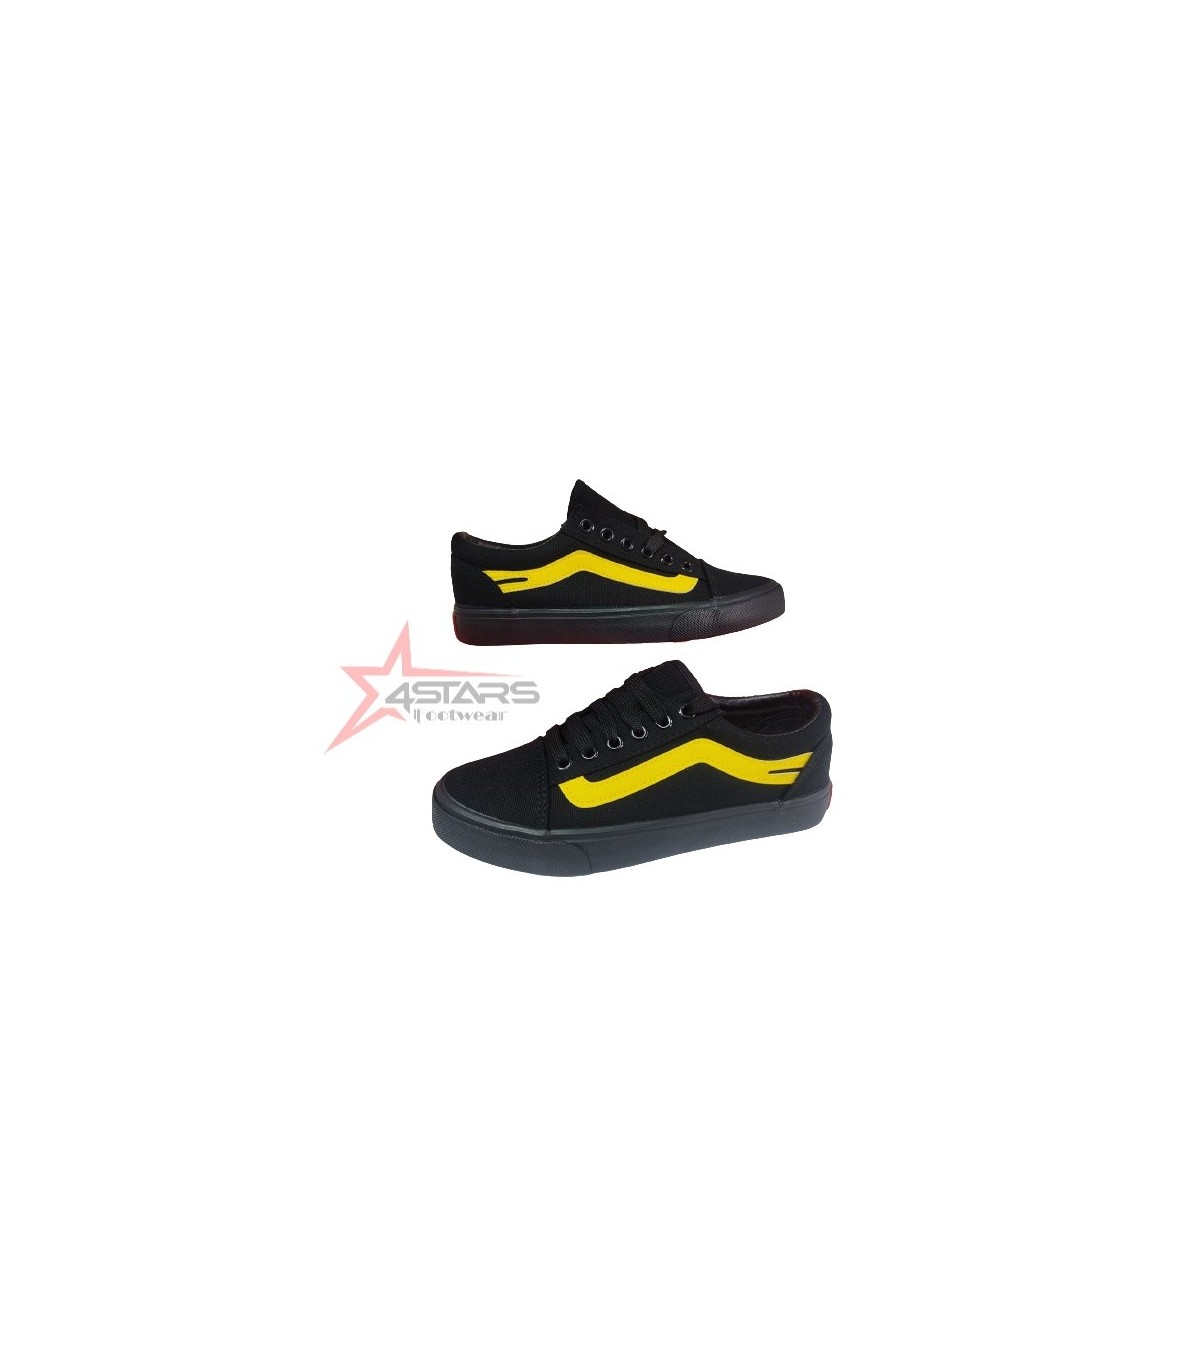 Women's Leopard Rubber Shoes (W011) - Black Yellow